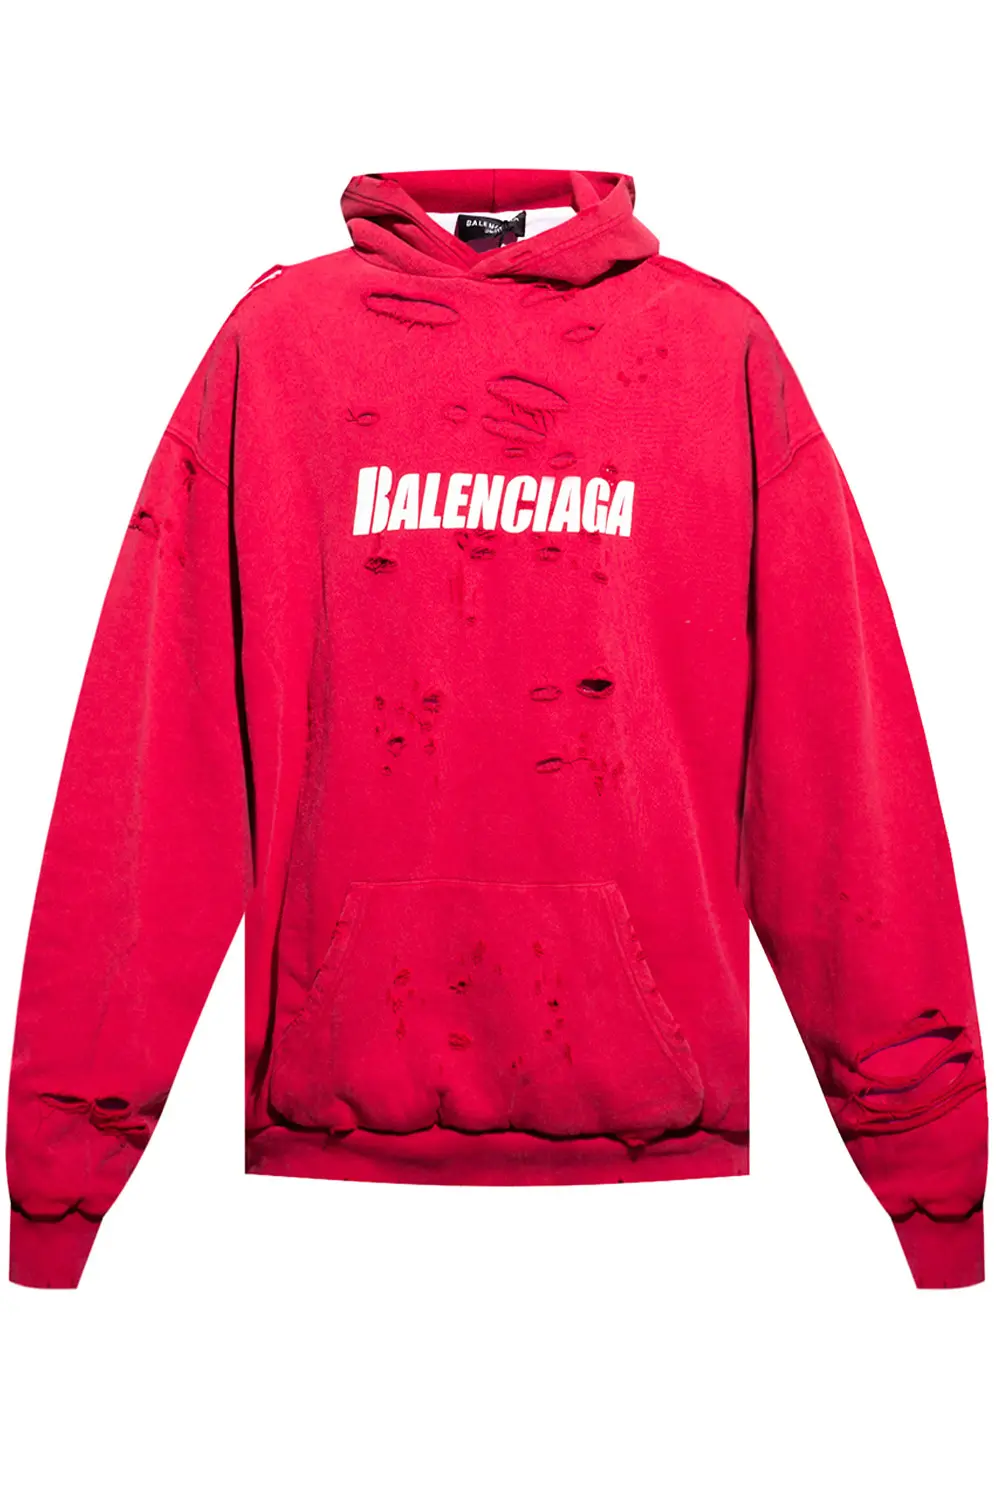 BALENCIAGA Sweatshirt With Holes バレンシアガ パーカー フーディ